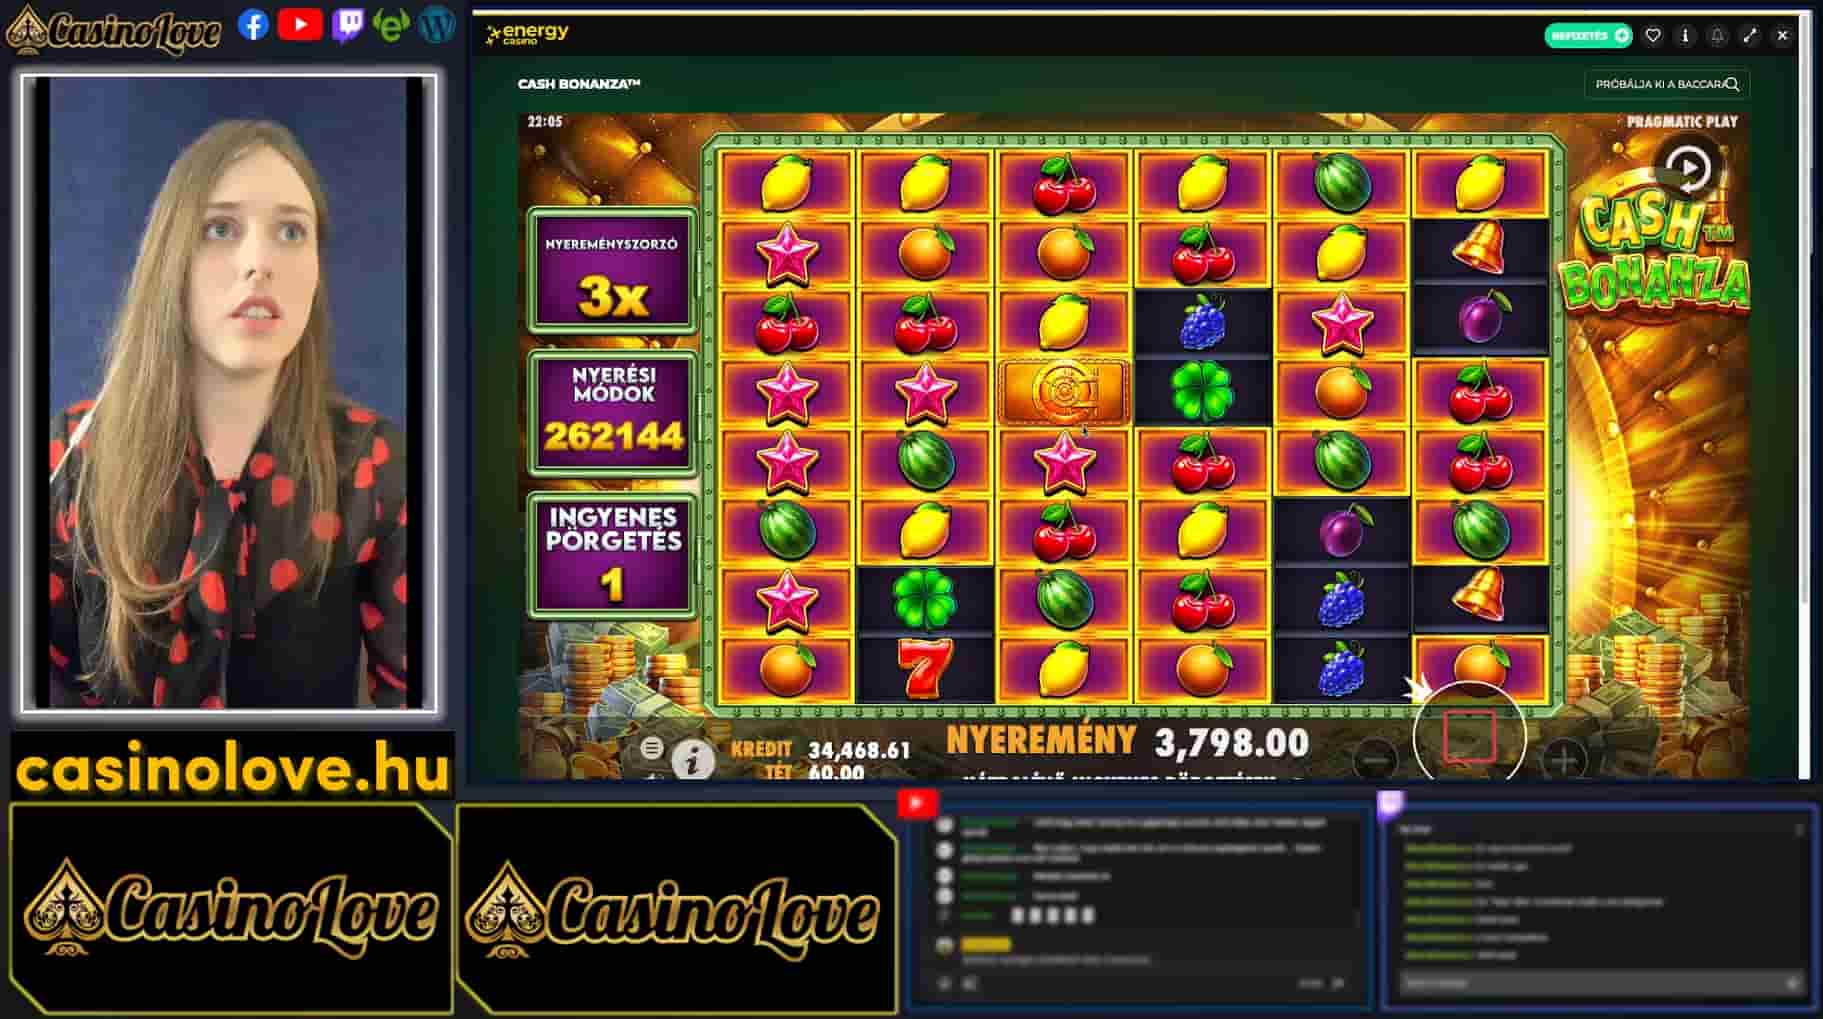 Cash Bonanza - stor gevinst på spilleautomat hos Energy Casino